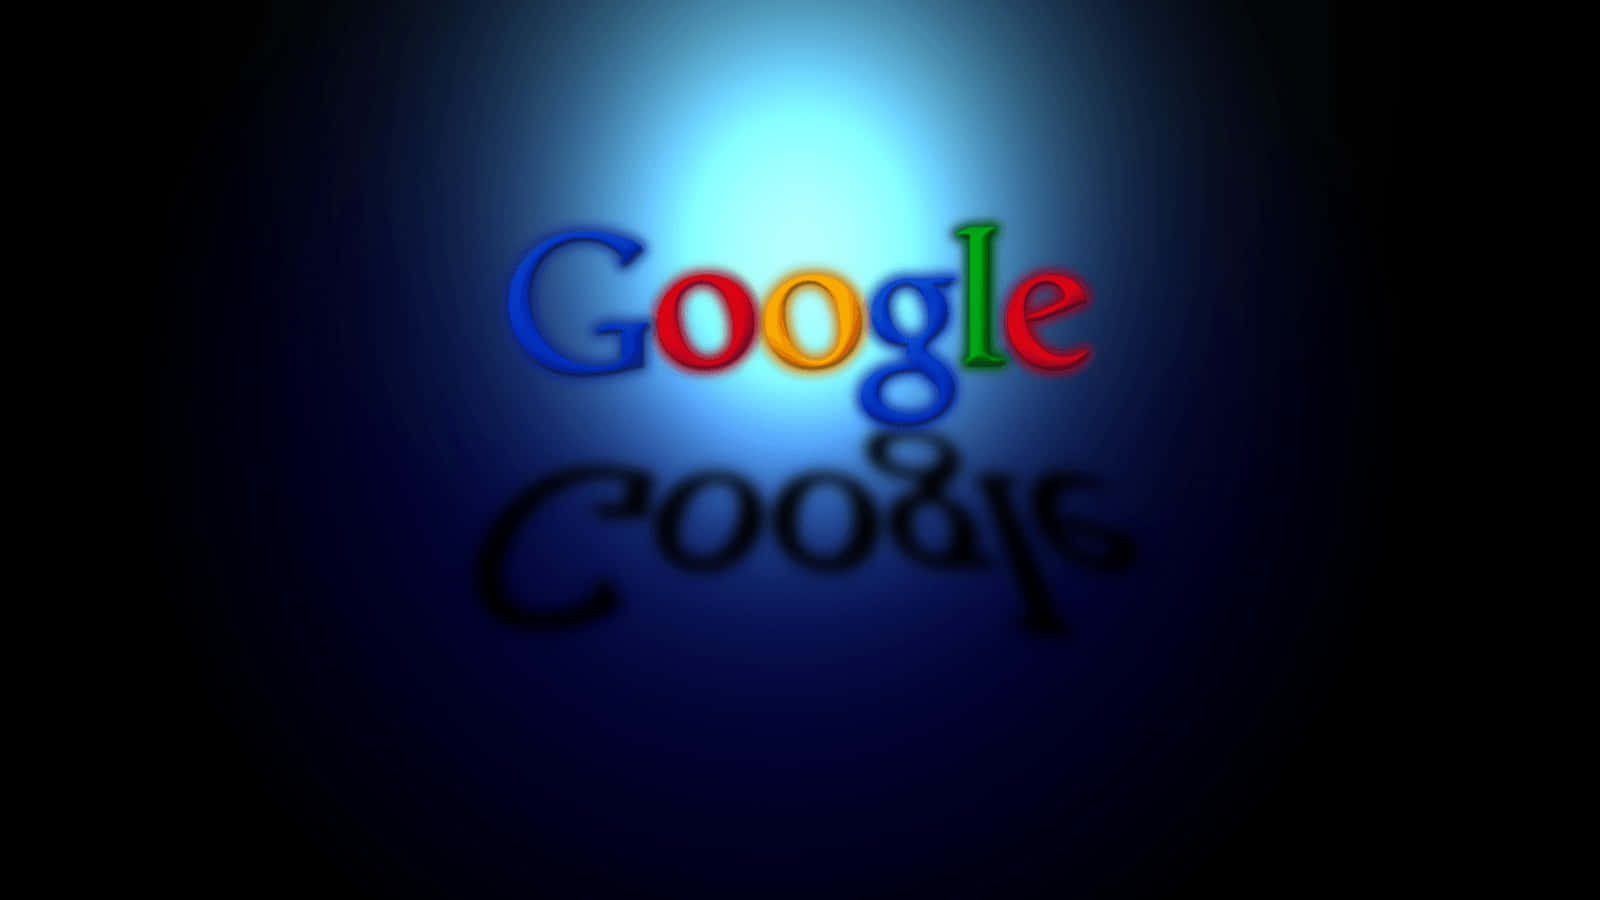 Google Background